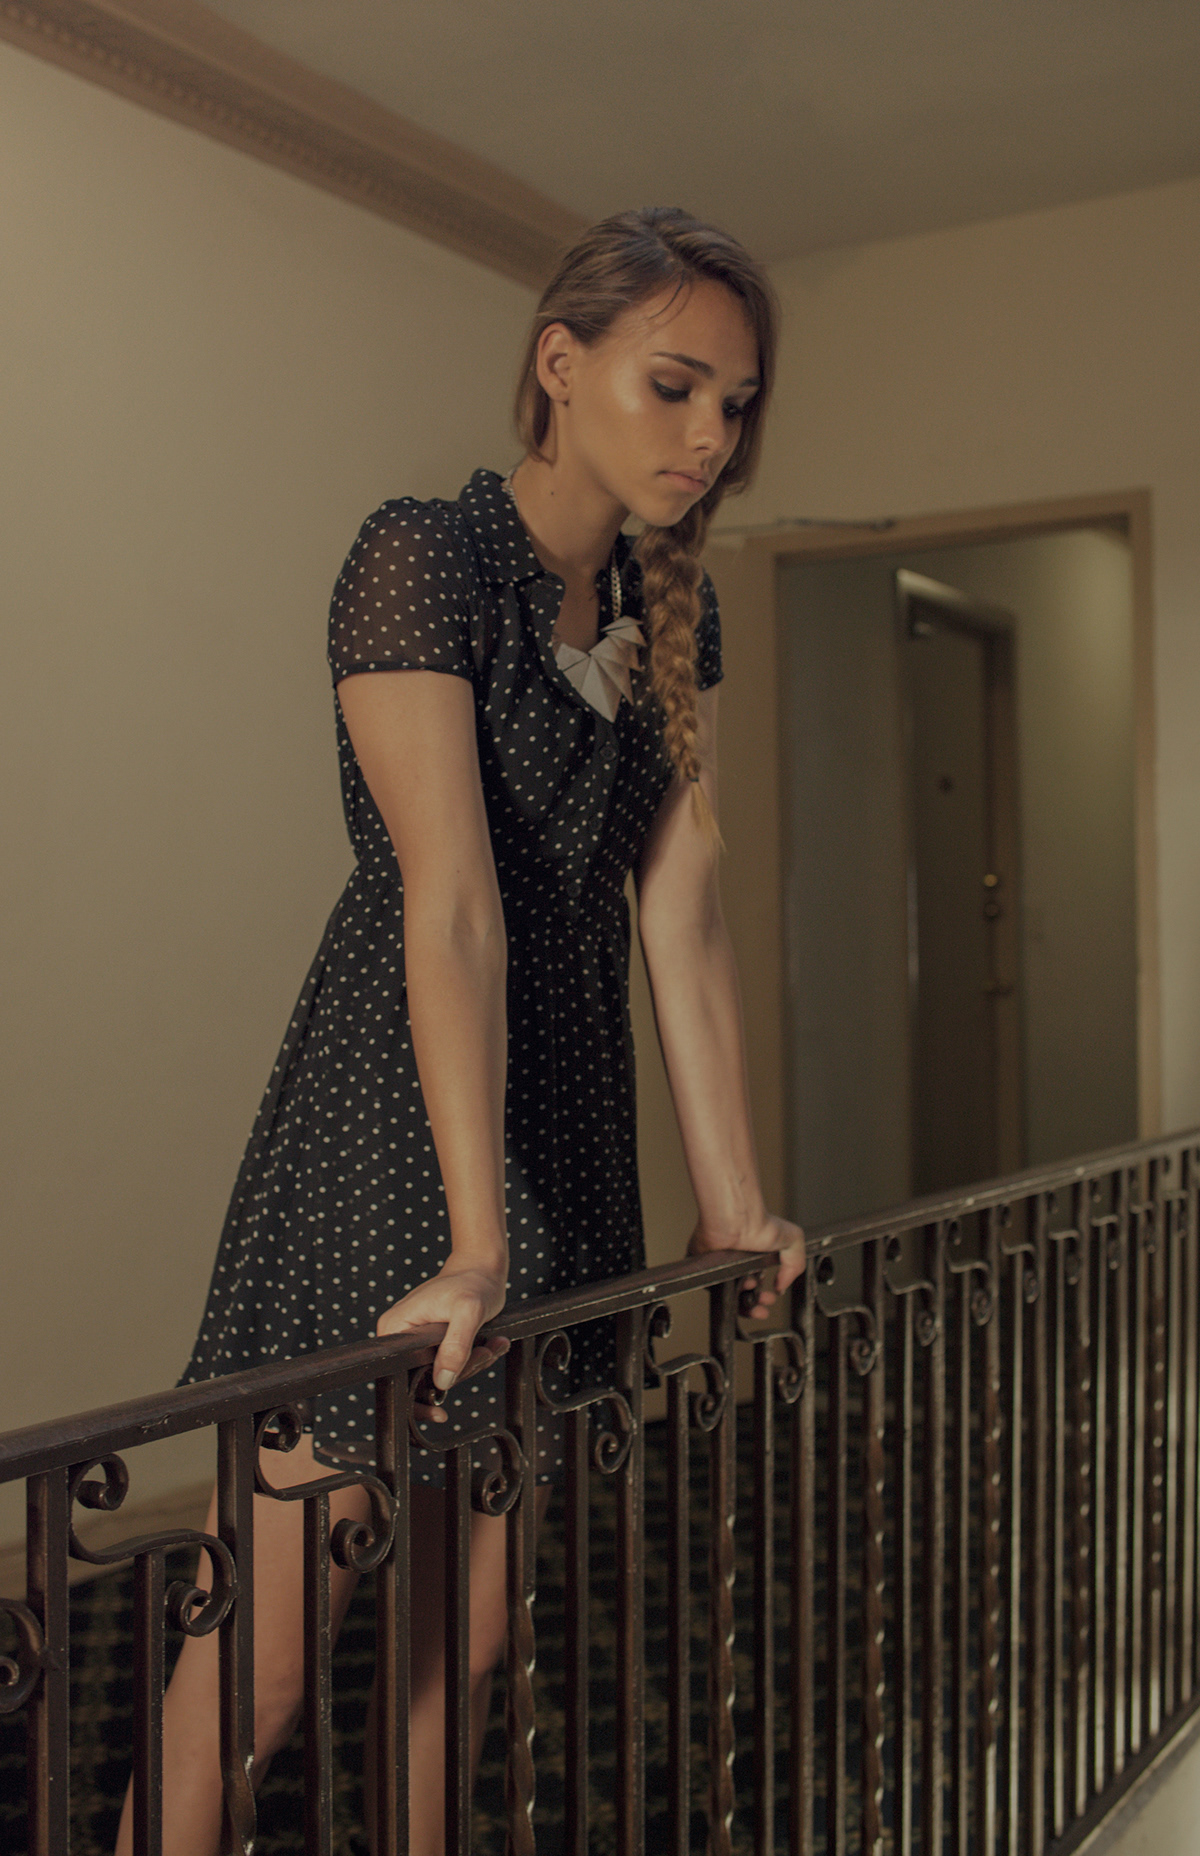 Natural Light dresses girls models l.a. models Los Angeles korea town polka dot spring apartment hallway